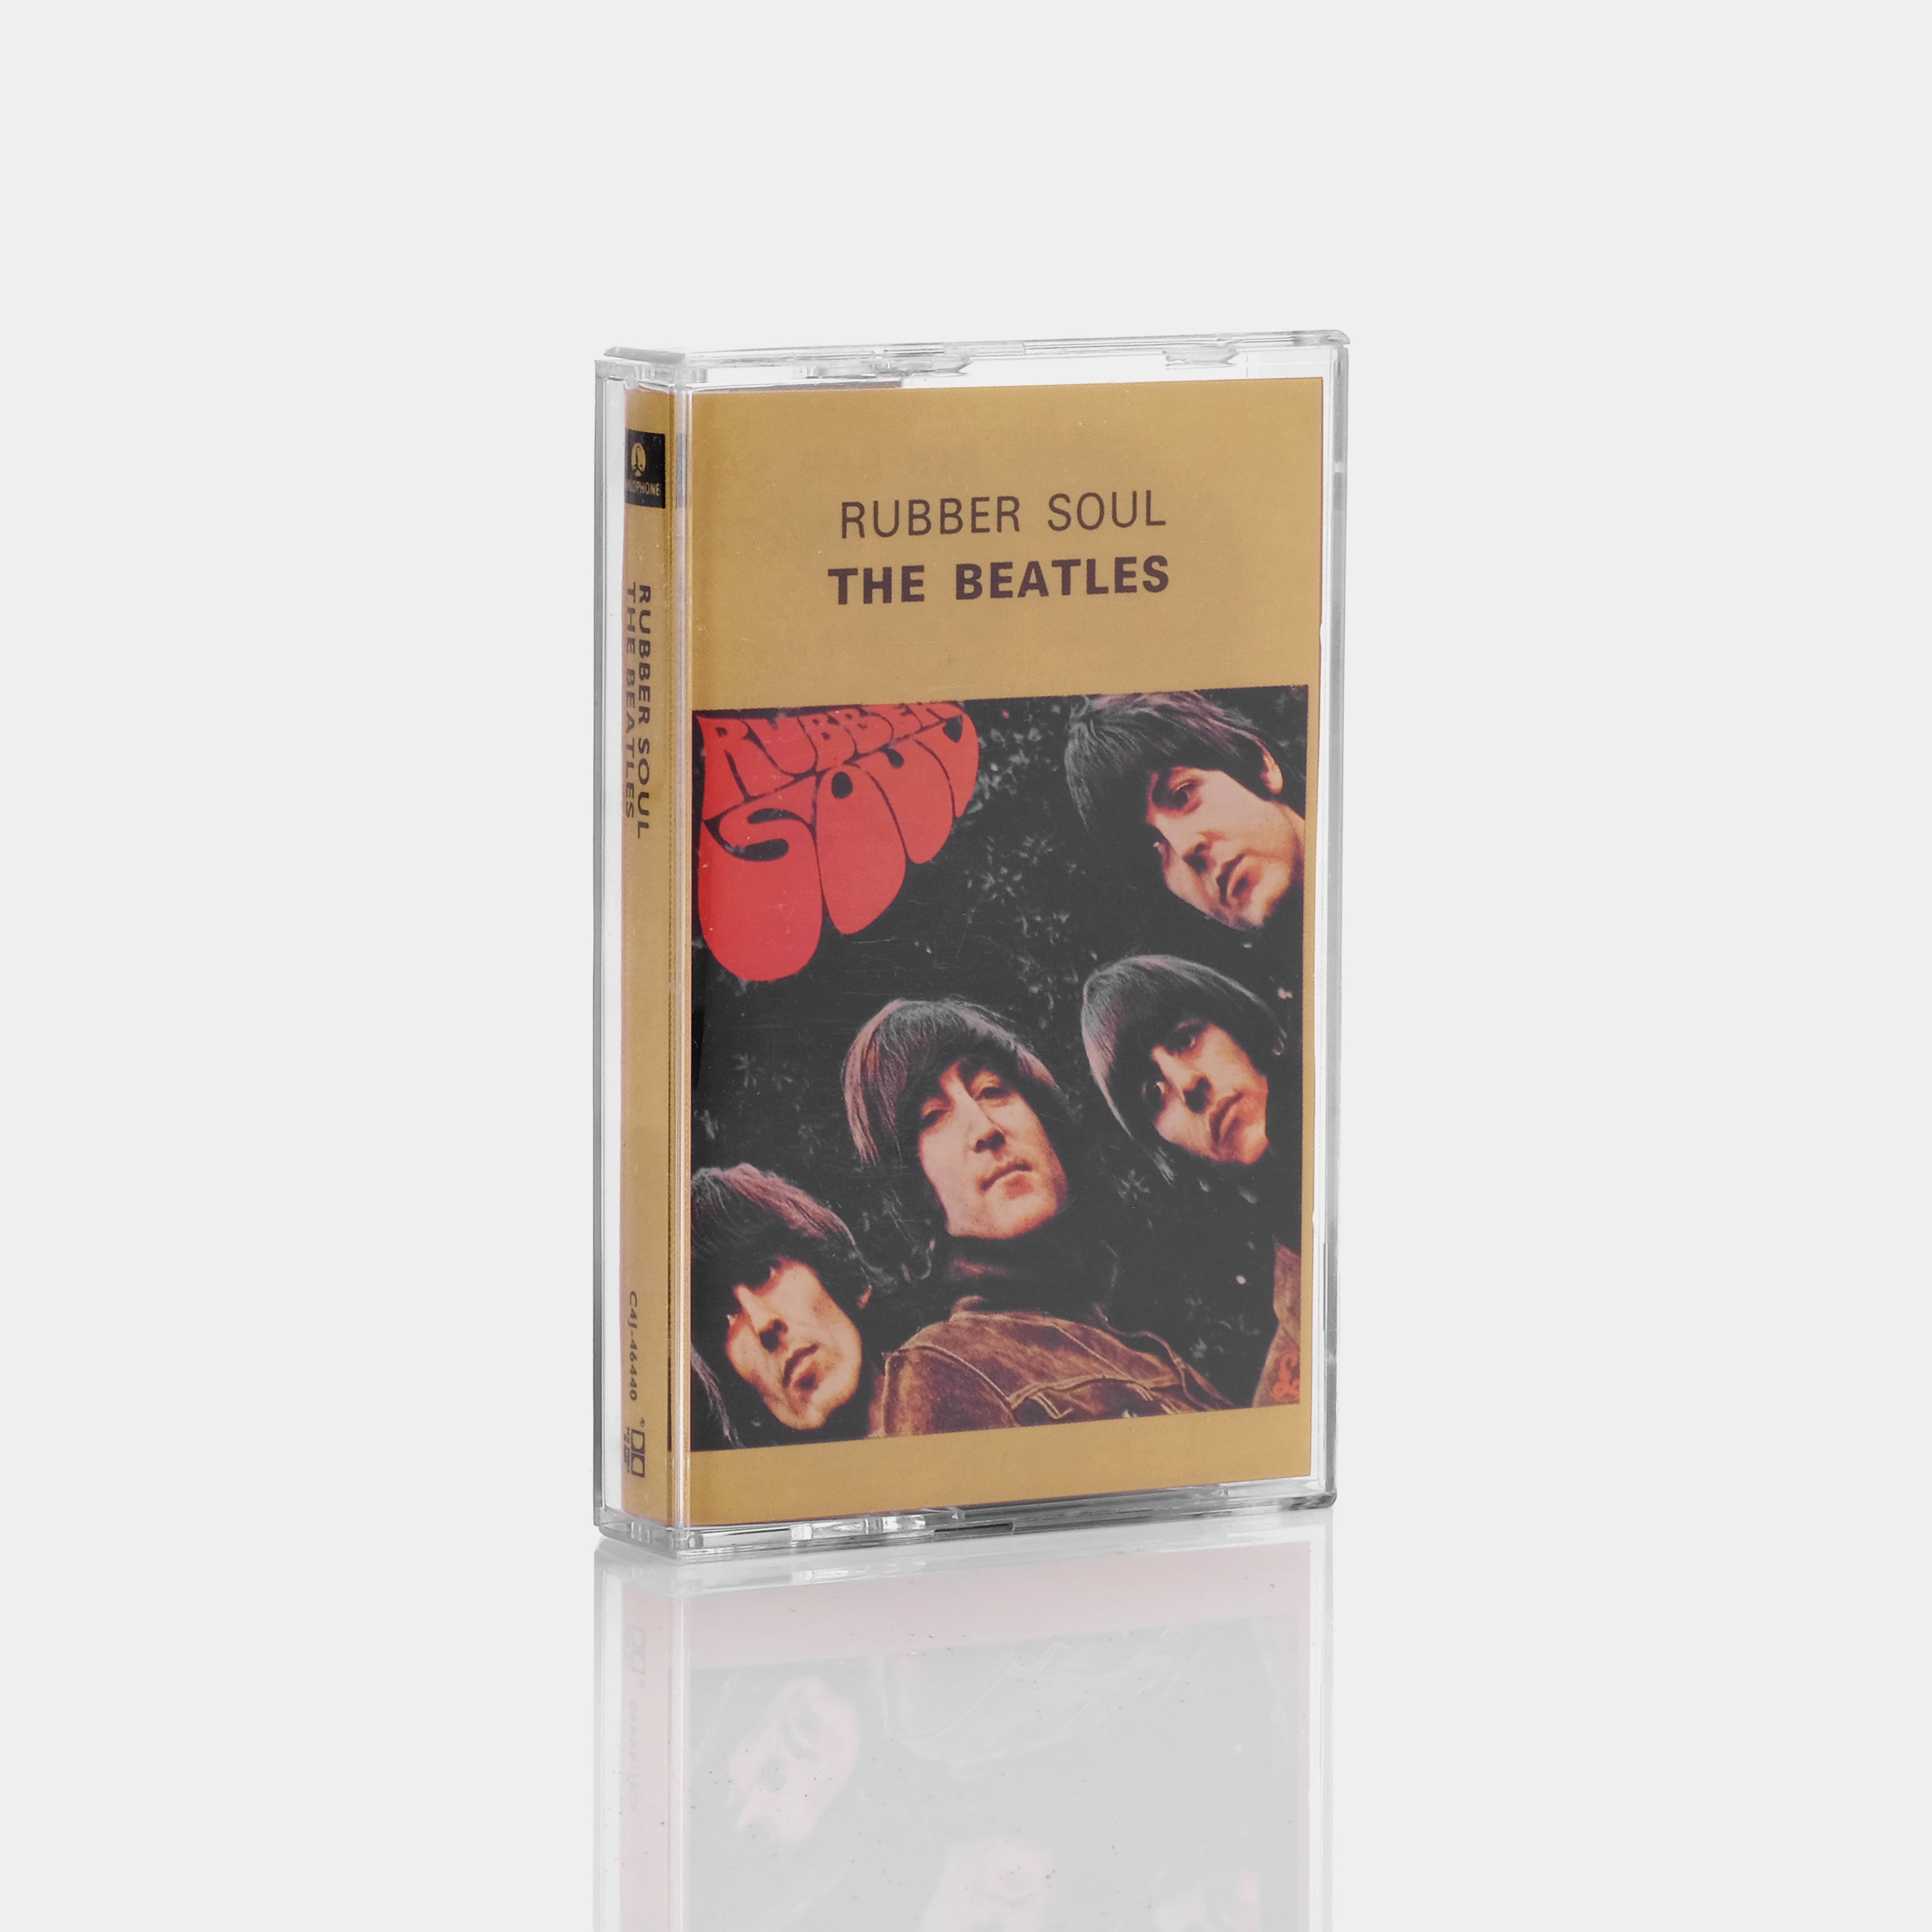 The Beatles - Rubber Soul Cassette Tape